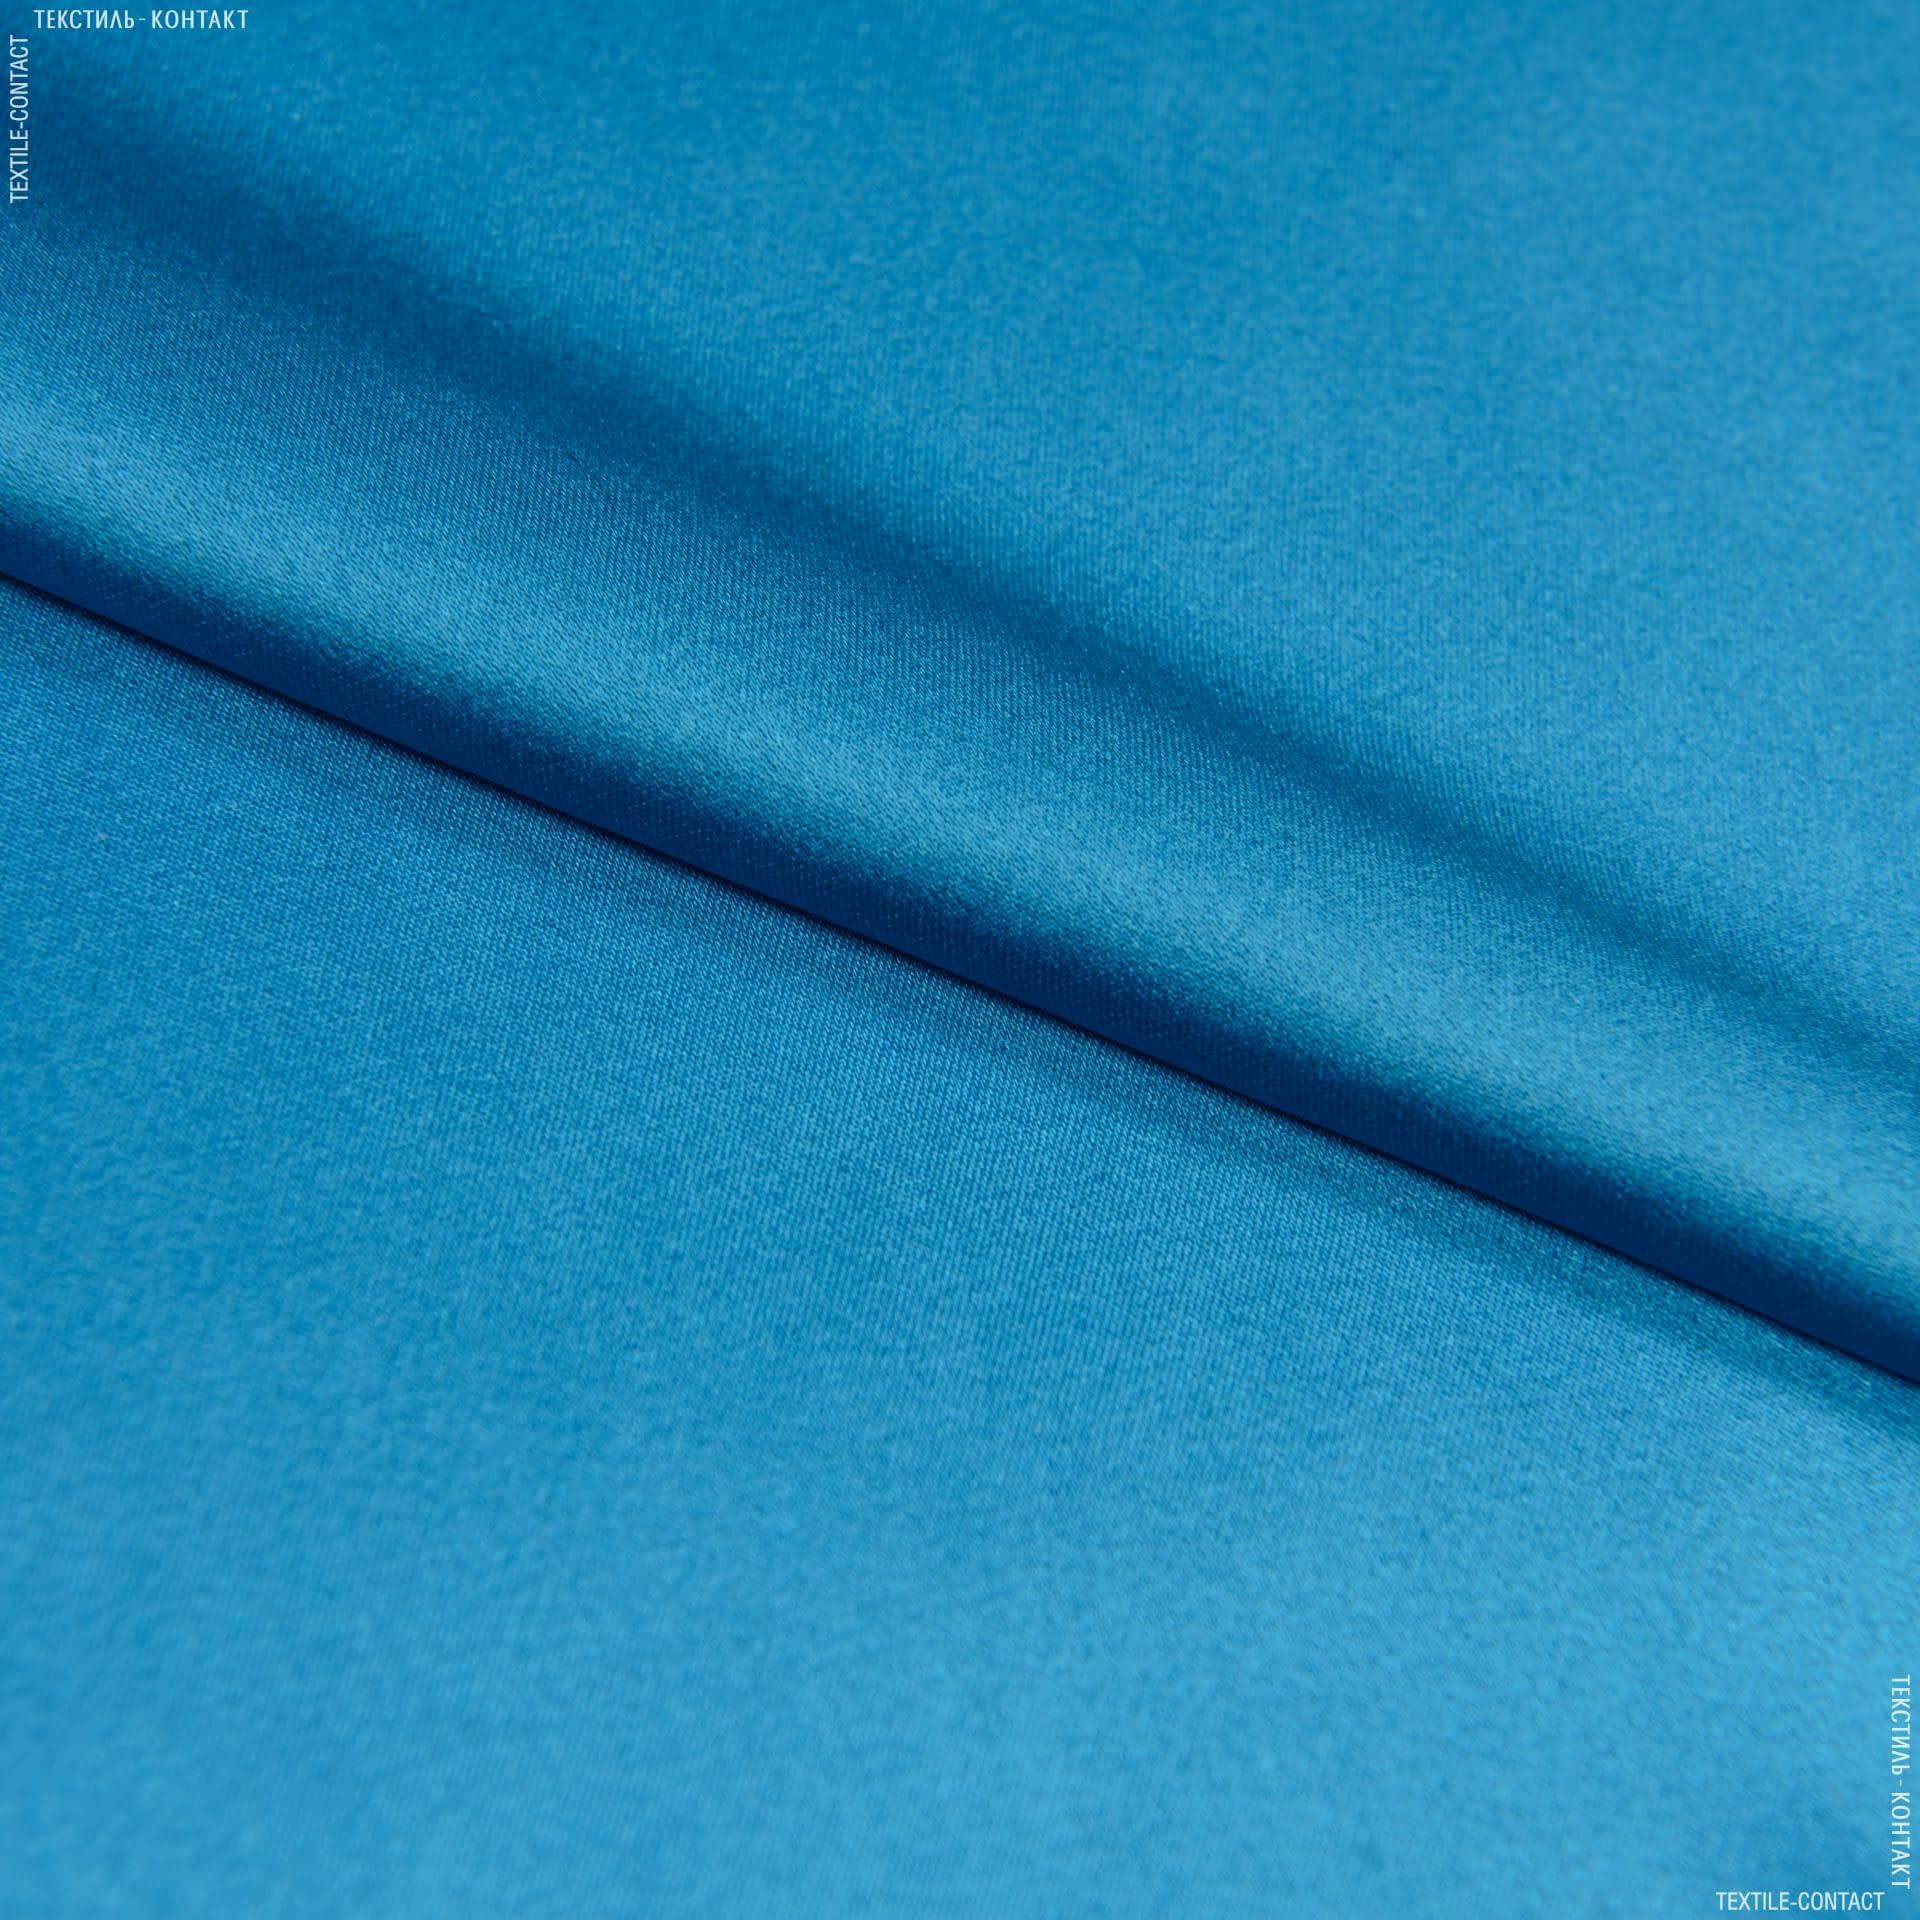 Тканини для суконь - Атлас шовк стрейч темно-блакитний